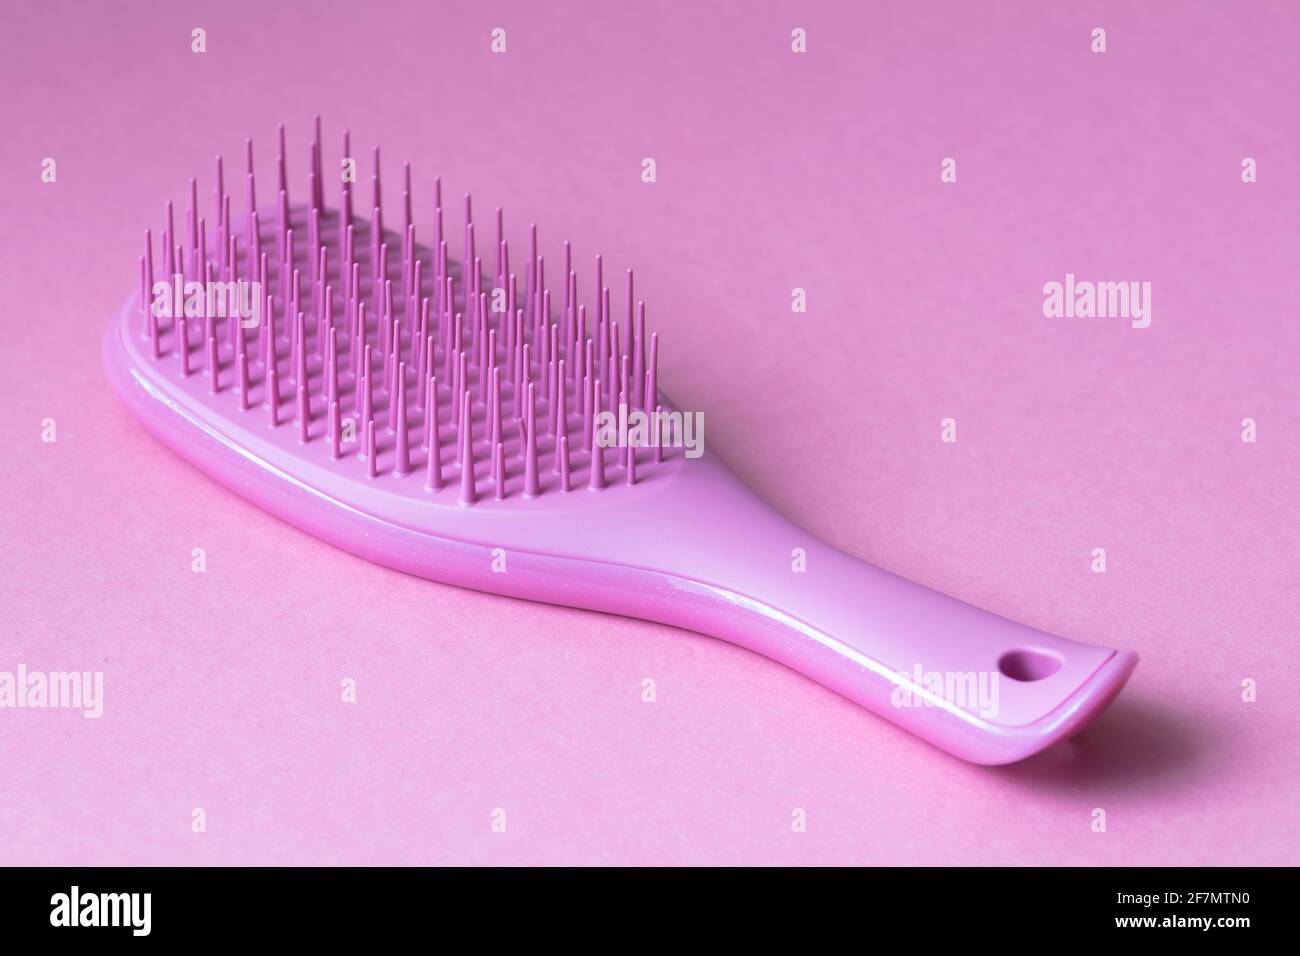 Pink hairbrush isolated on pink background Stock Photo